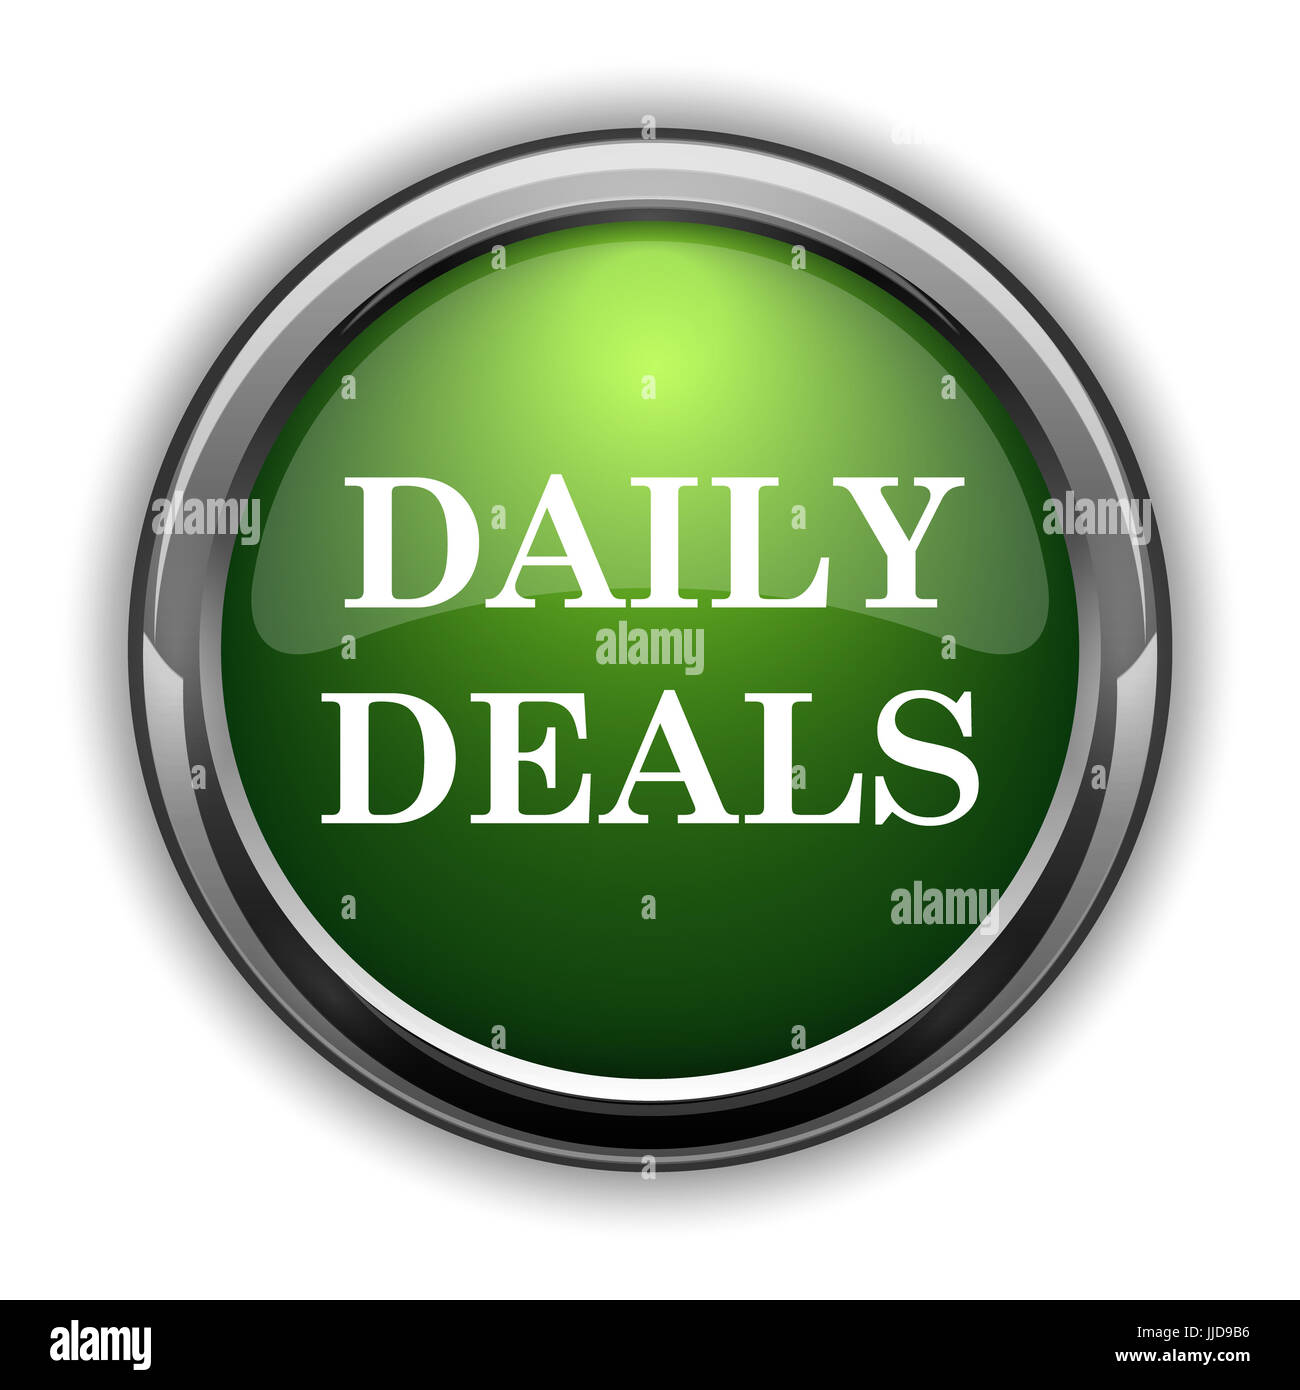 https://c8.alamy.com/comp/JJD9B6/daily-deals-icon-daily-deals-website-button-on-white-background-JJD9B6.jpg